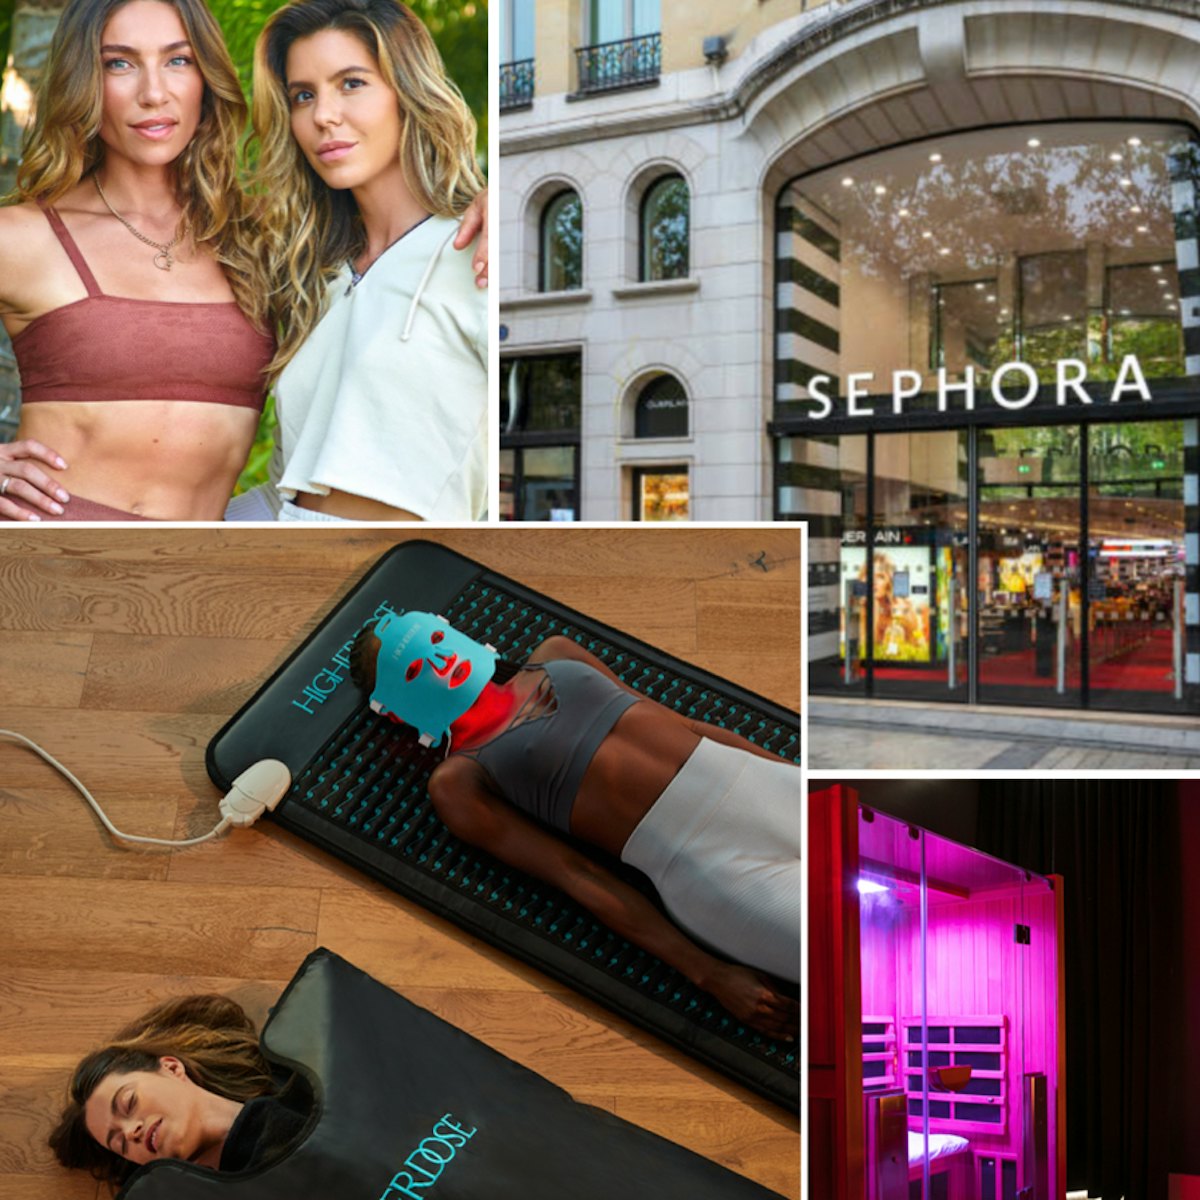 How Sephora focused on data to prepare for Black Friday